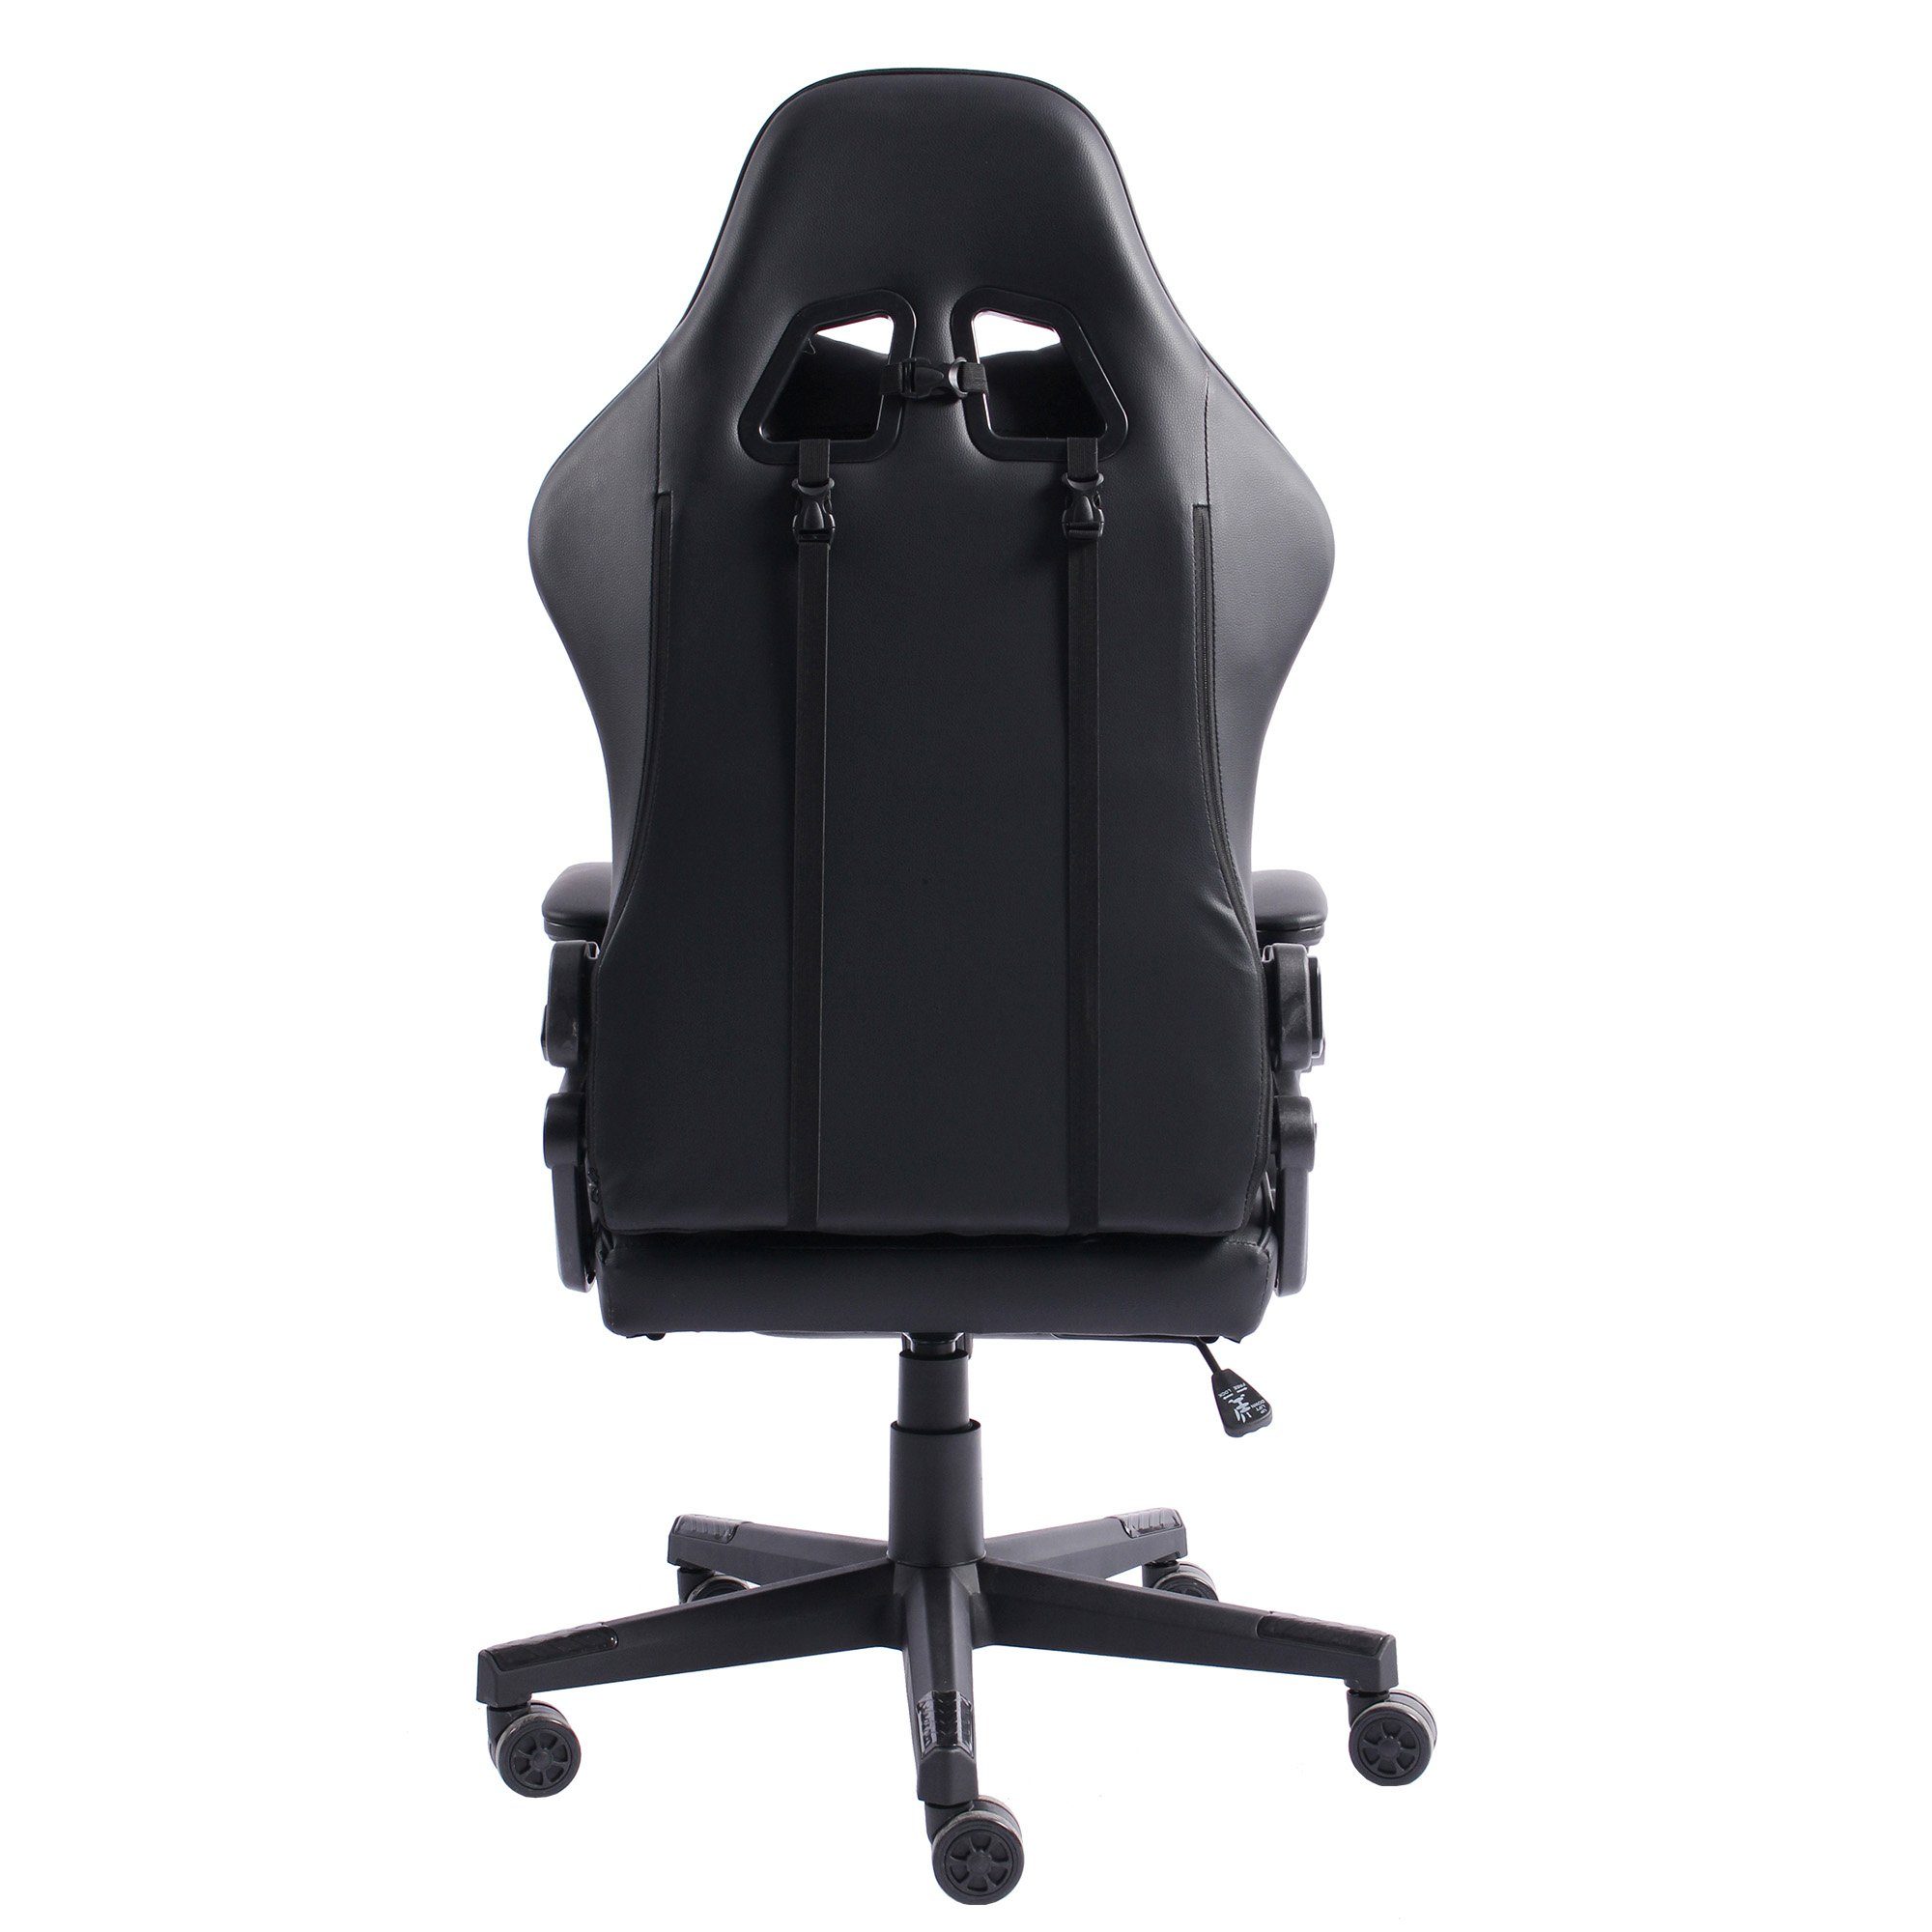 Chefsessel Armando Fußstütze Racing-Design TRISENS Bürostuhl -Rosa Chair Gaming PC-Stuhl Stück), (1 Chefsessel Schwarz/Military